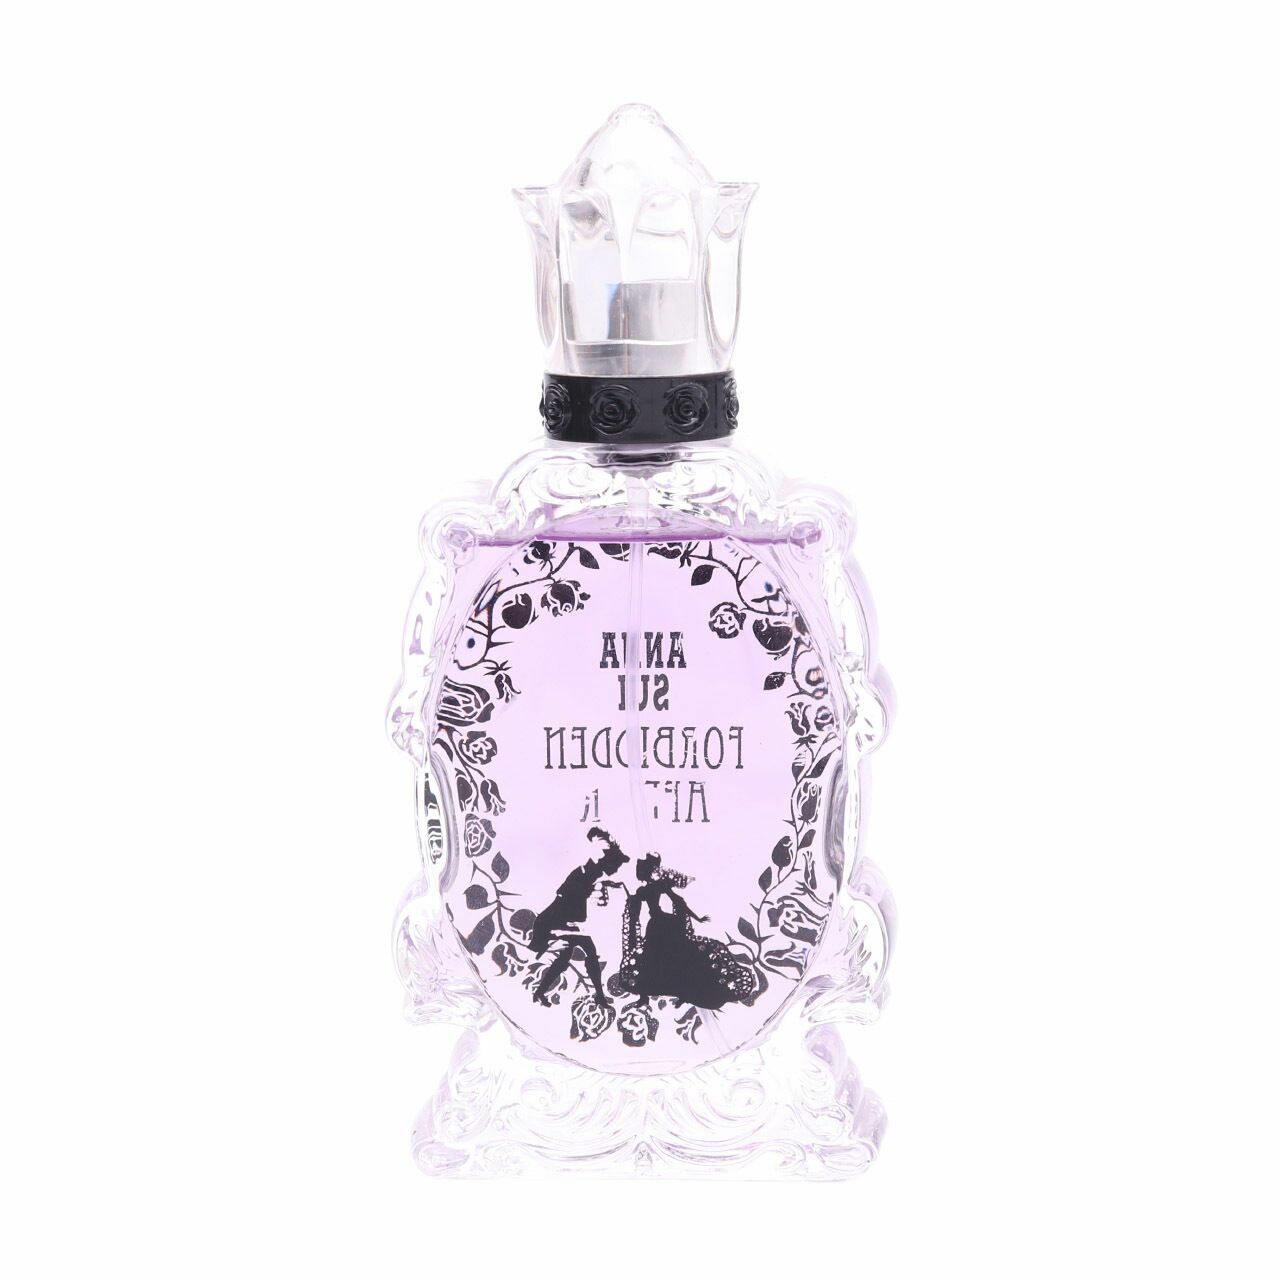 Anna Sui Forbidden Eau De Toilette Fragrance